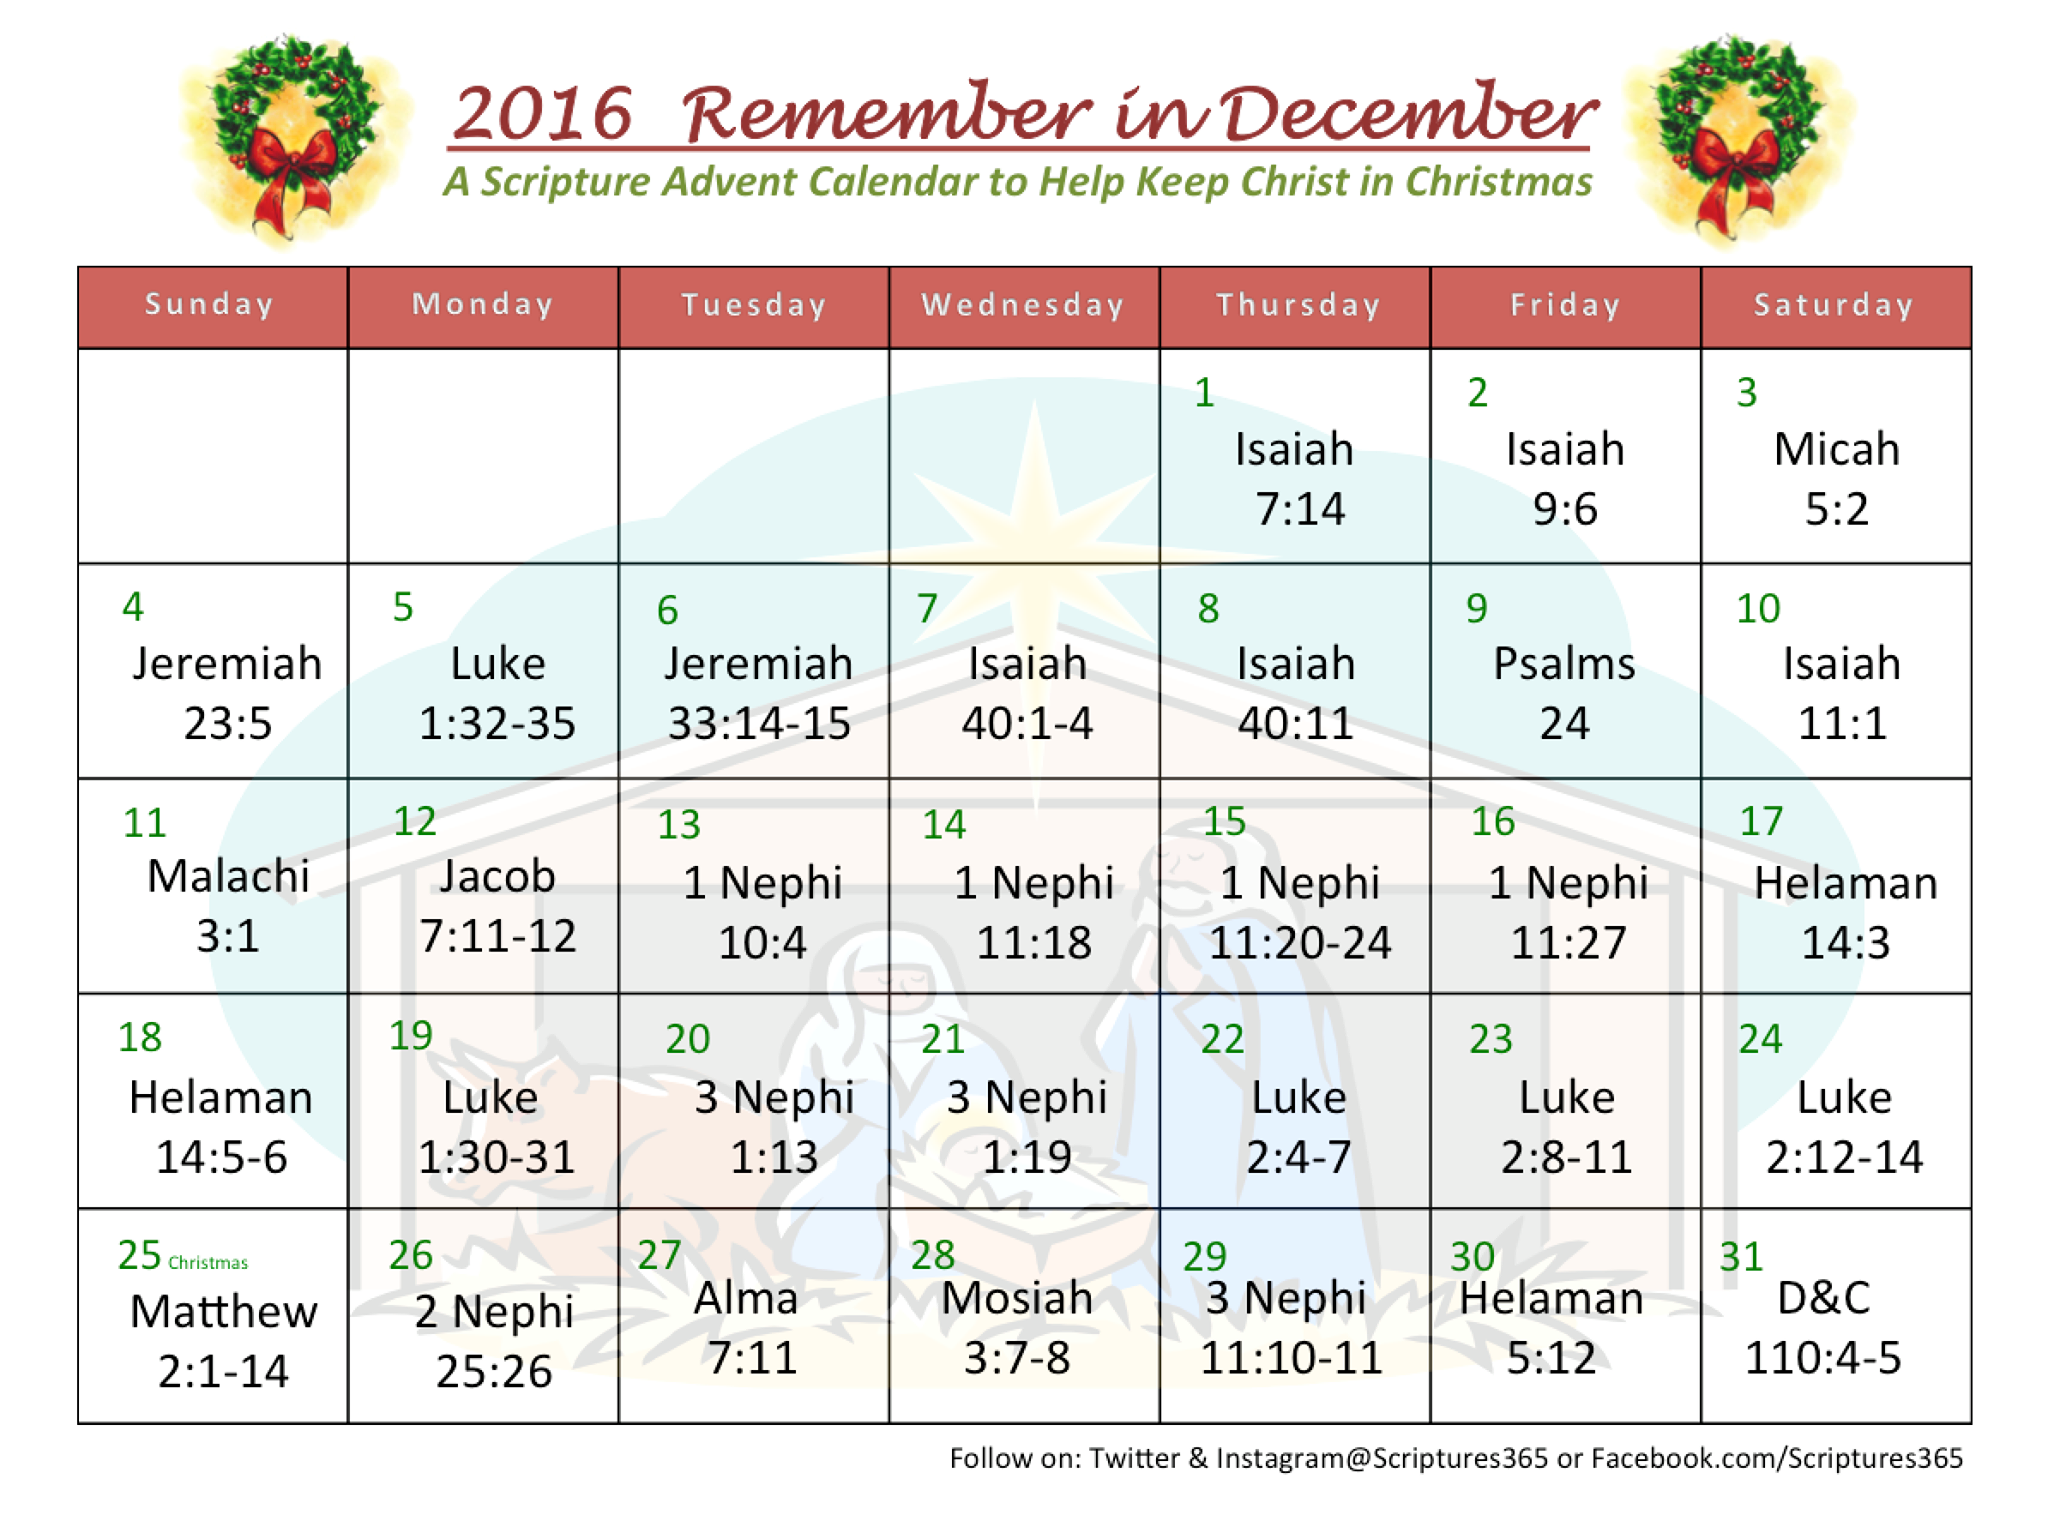 ScriptureaDay Advent Calendar for December LDS365 Resources from